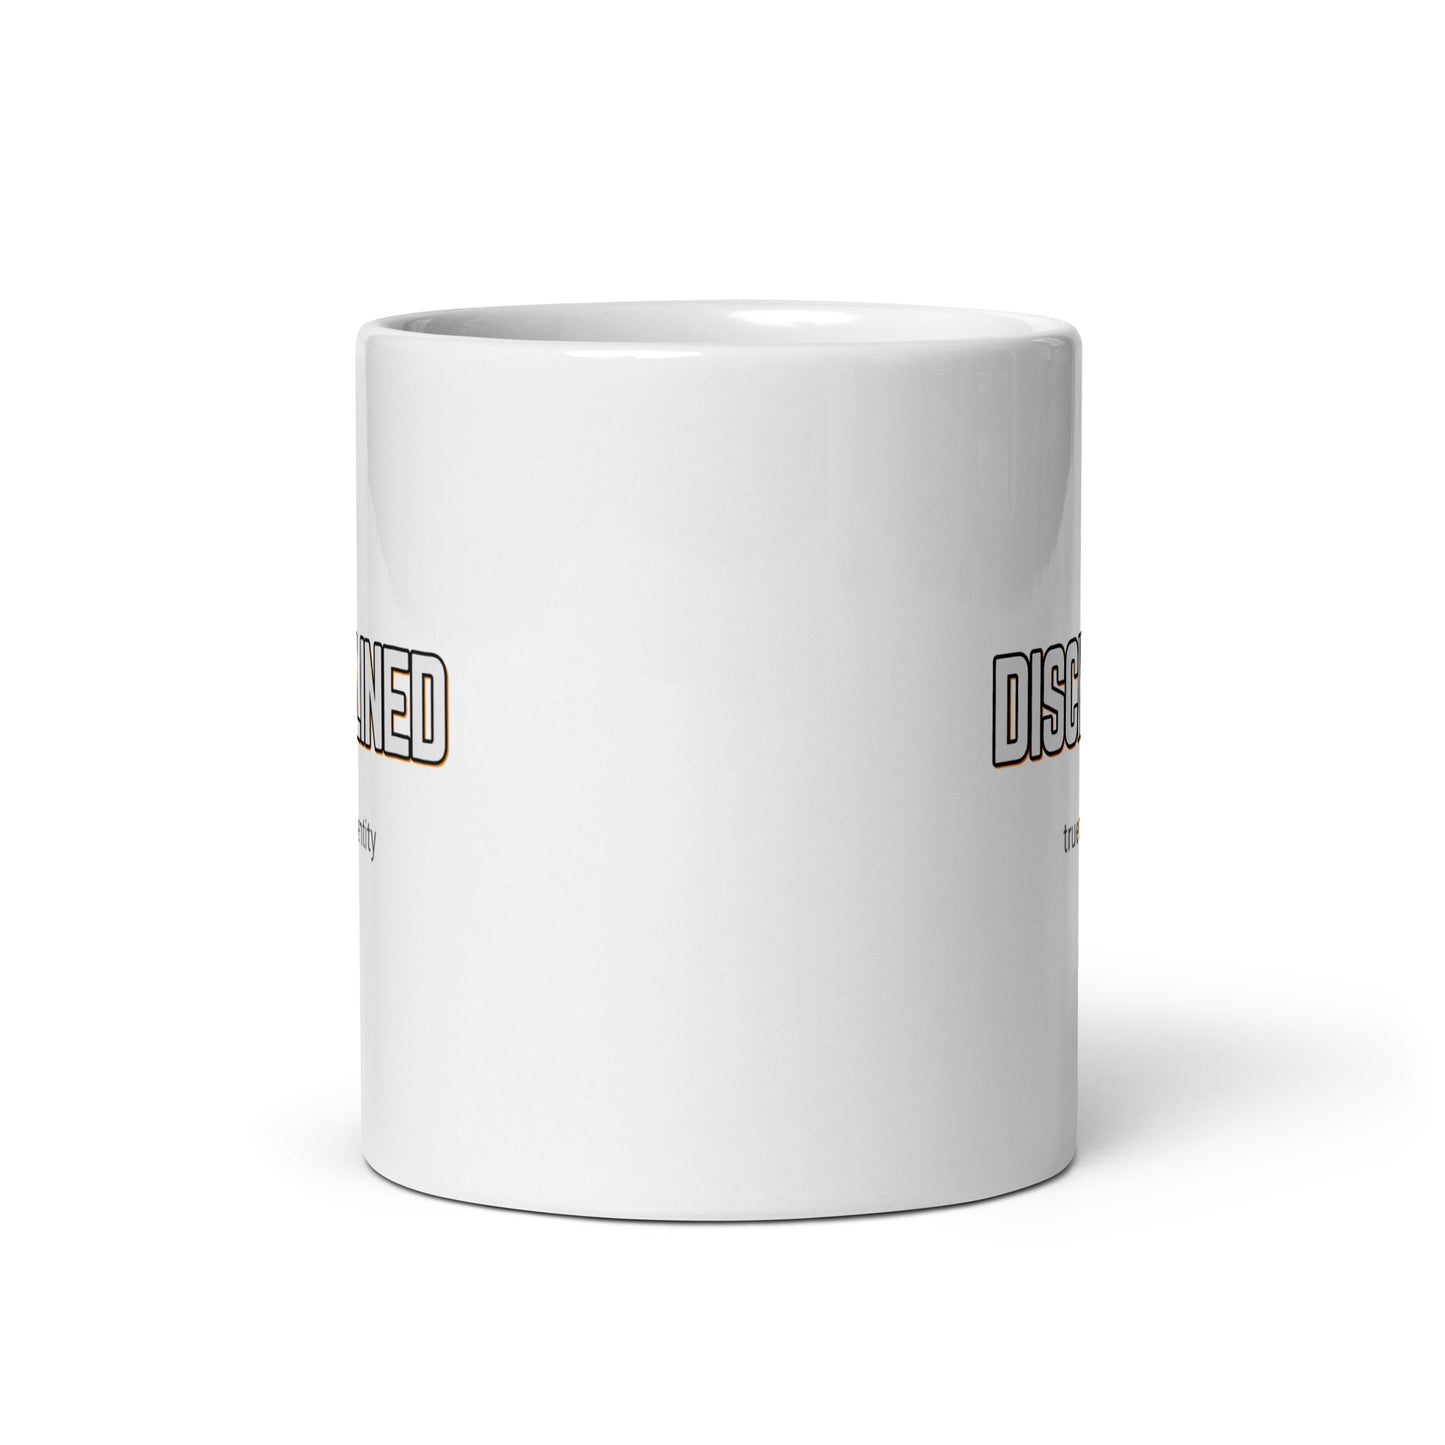 DISCIPLINED White Coffee Mug Bold 11 oz or 15 oz